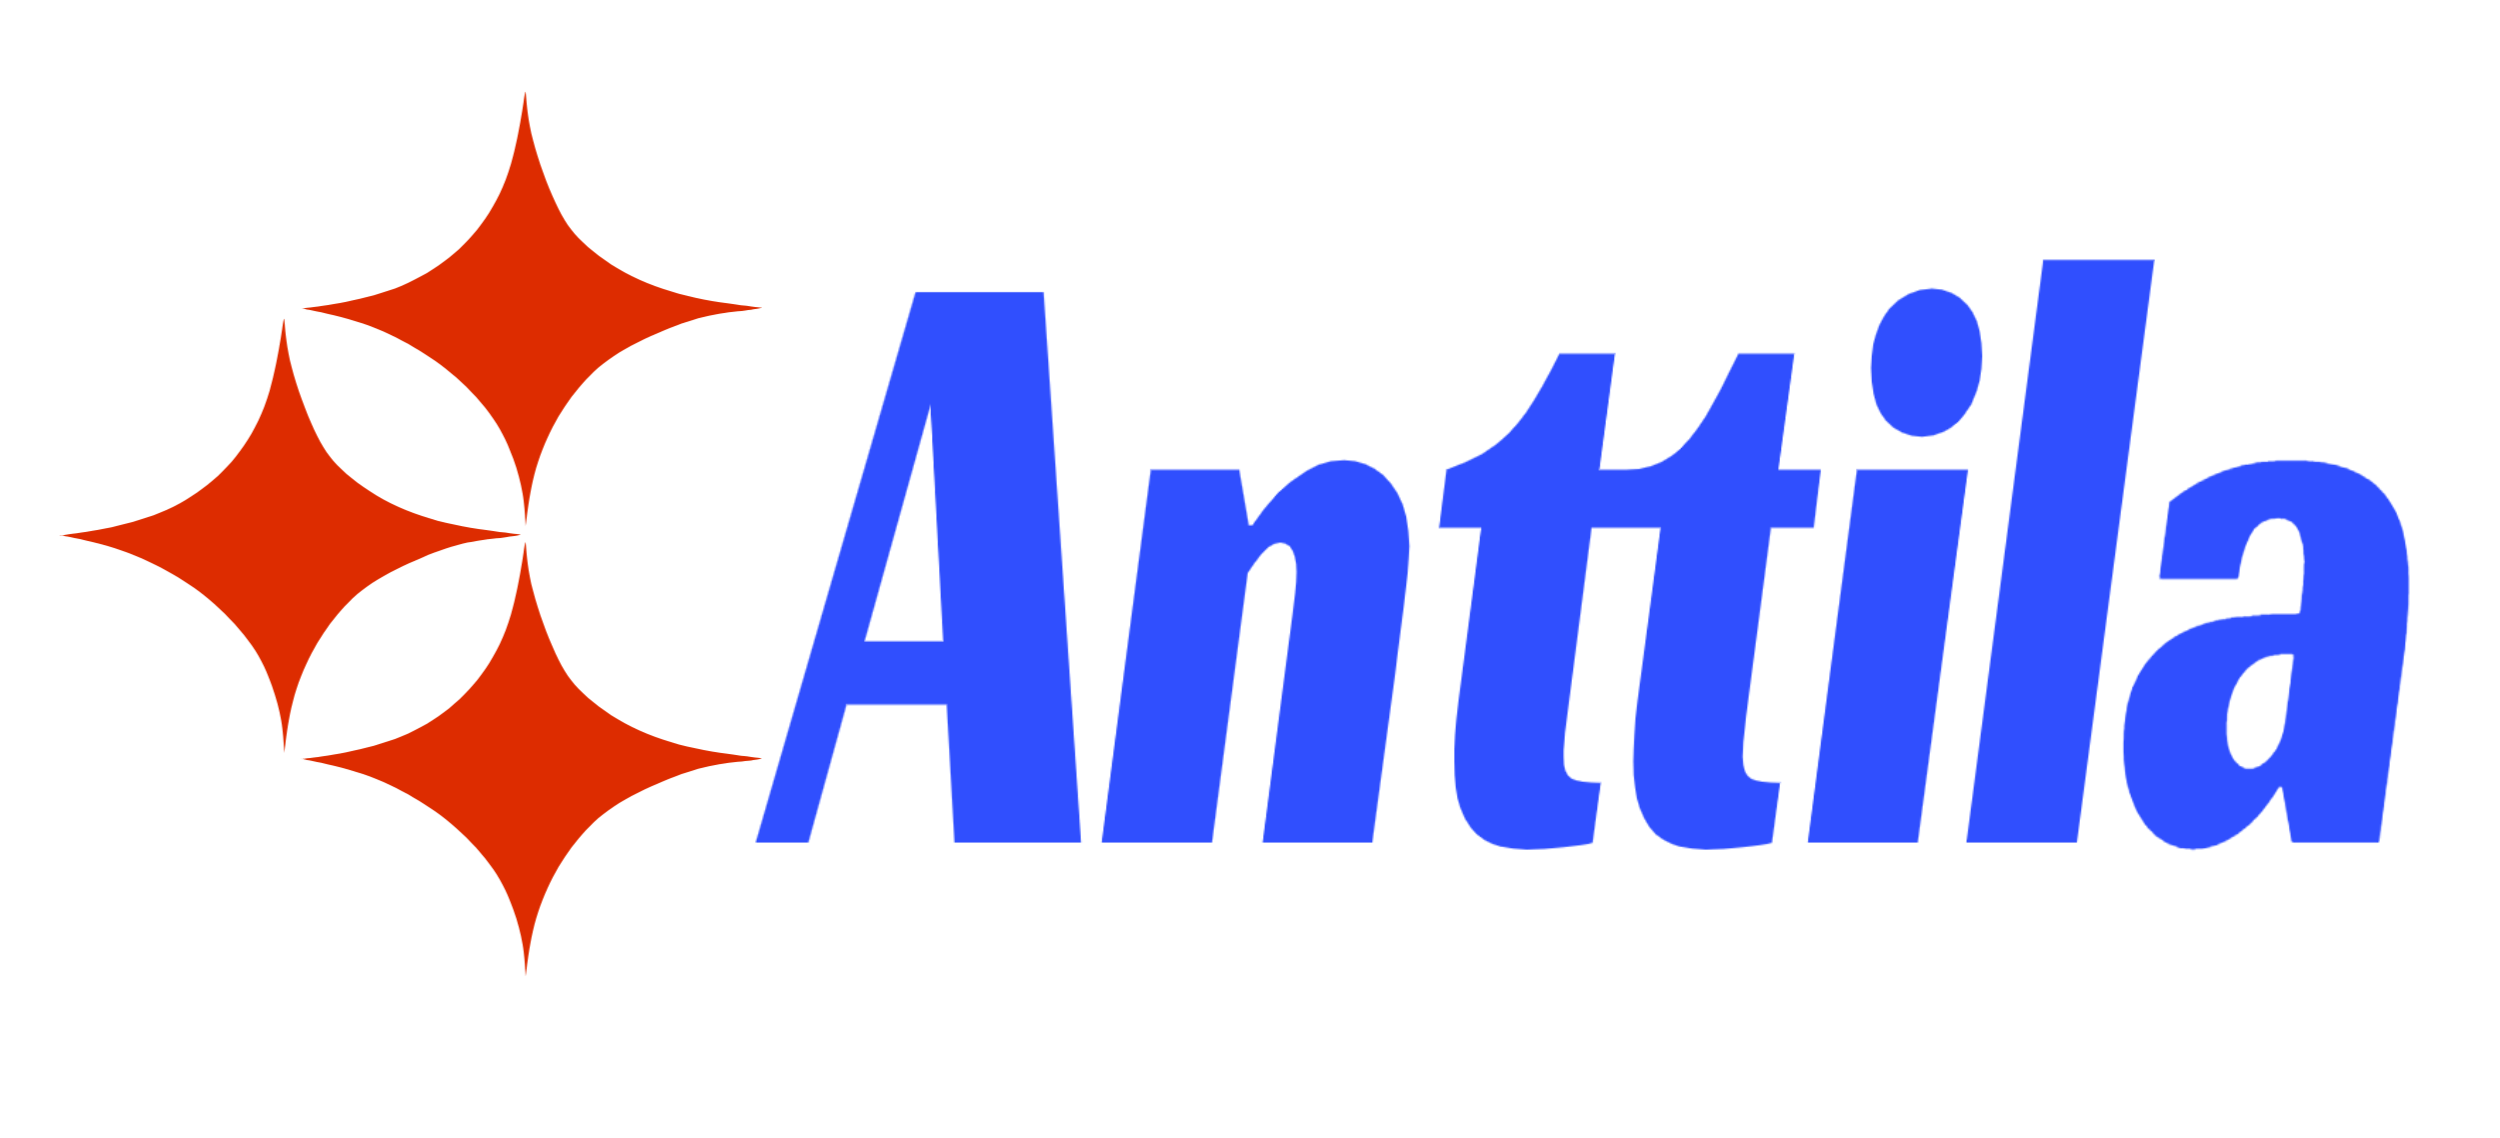 Anttila.net